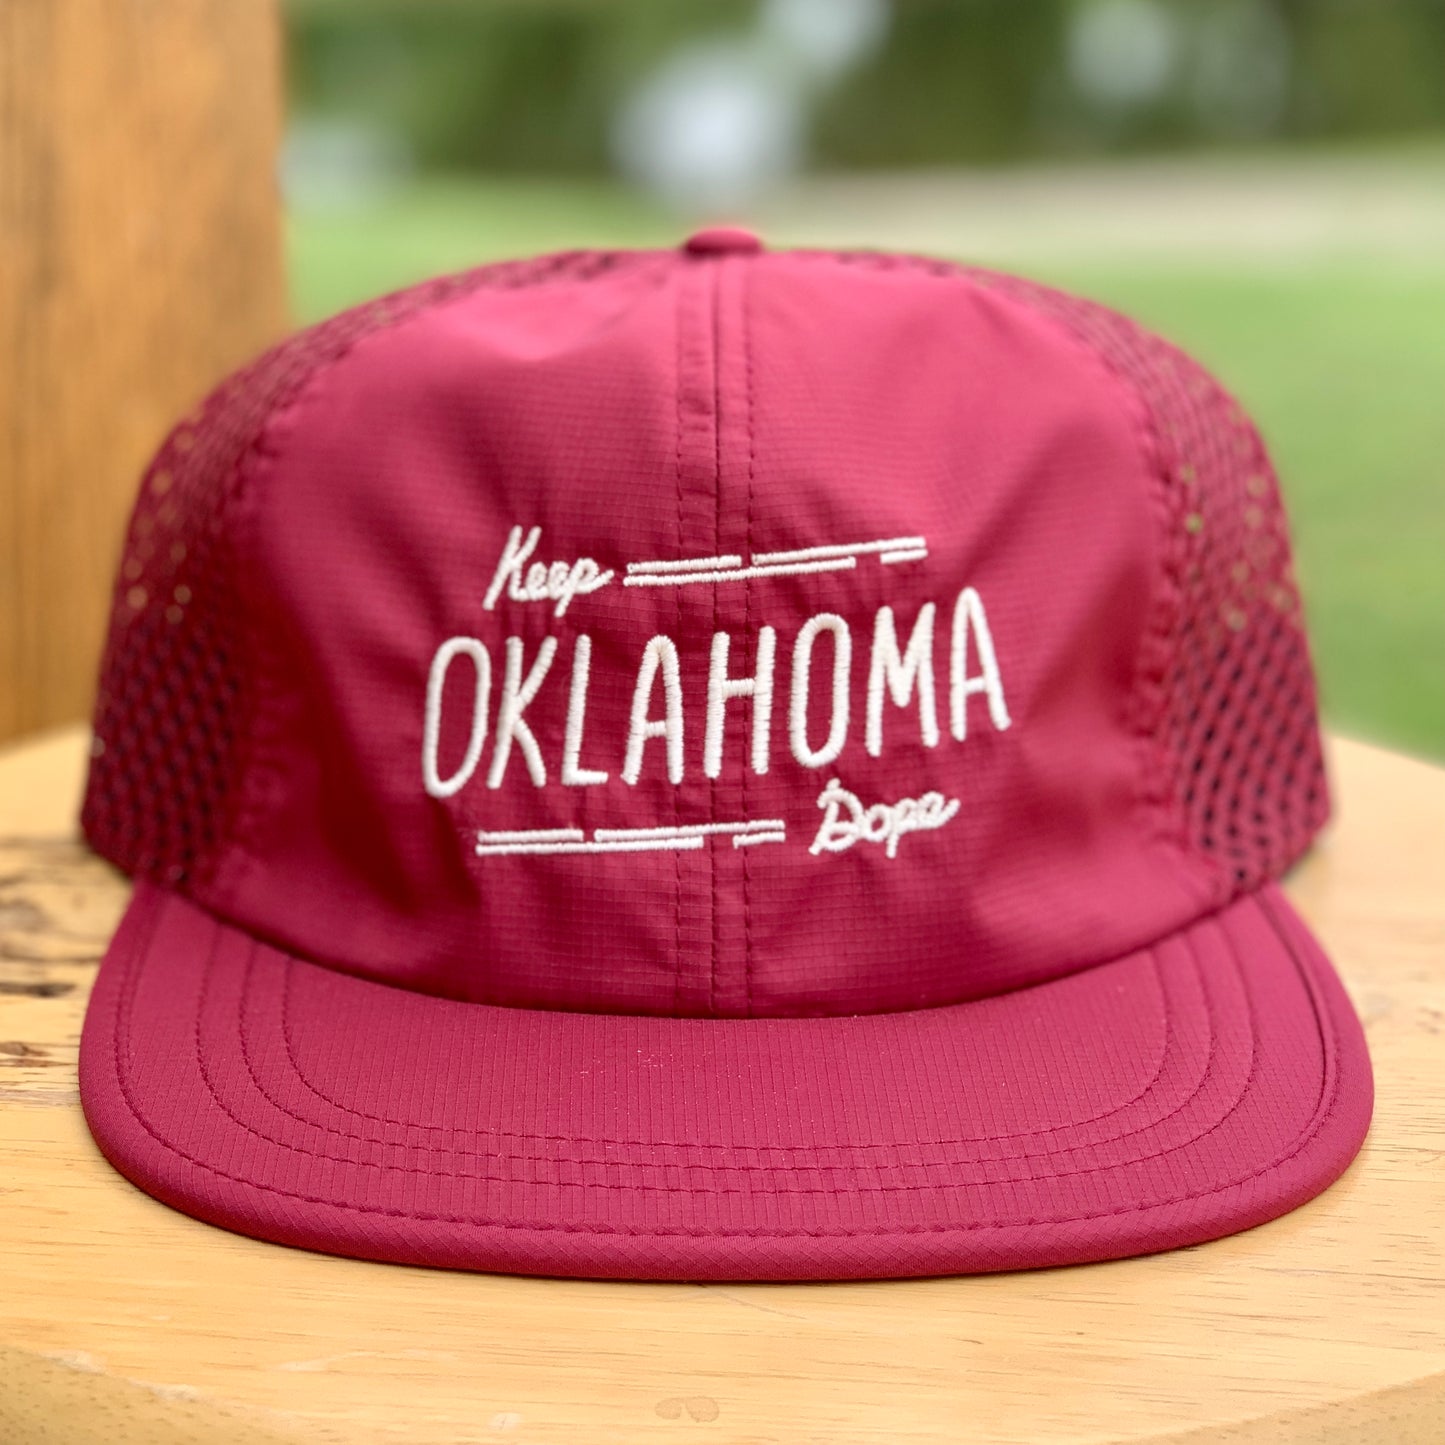 Keep Oklahoma Dope Hat - Red